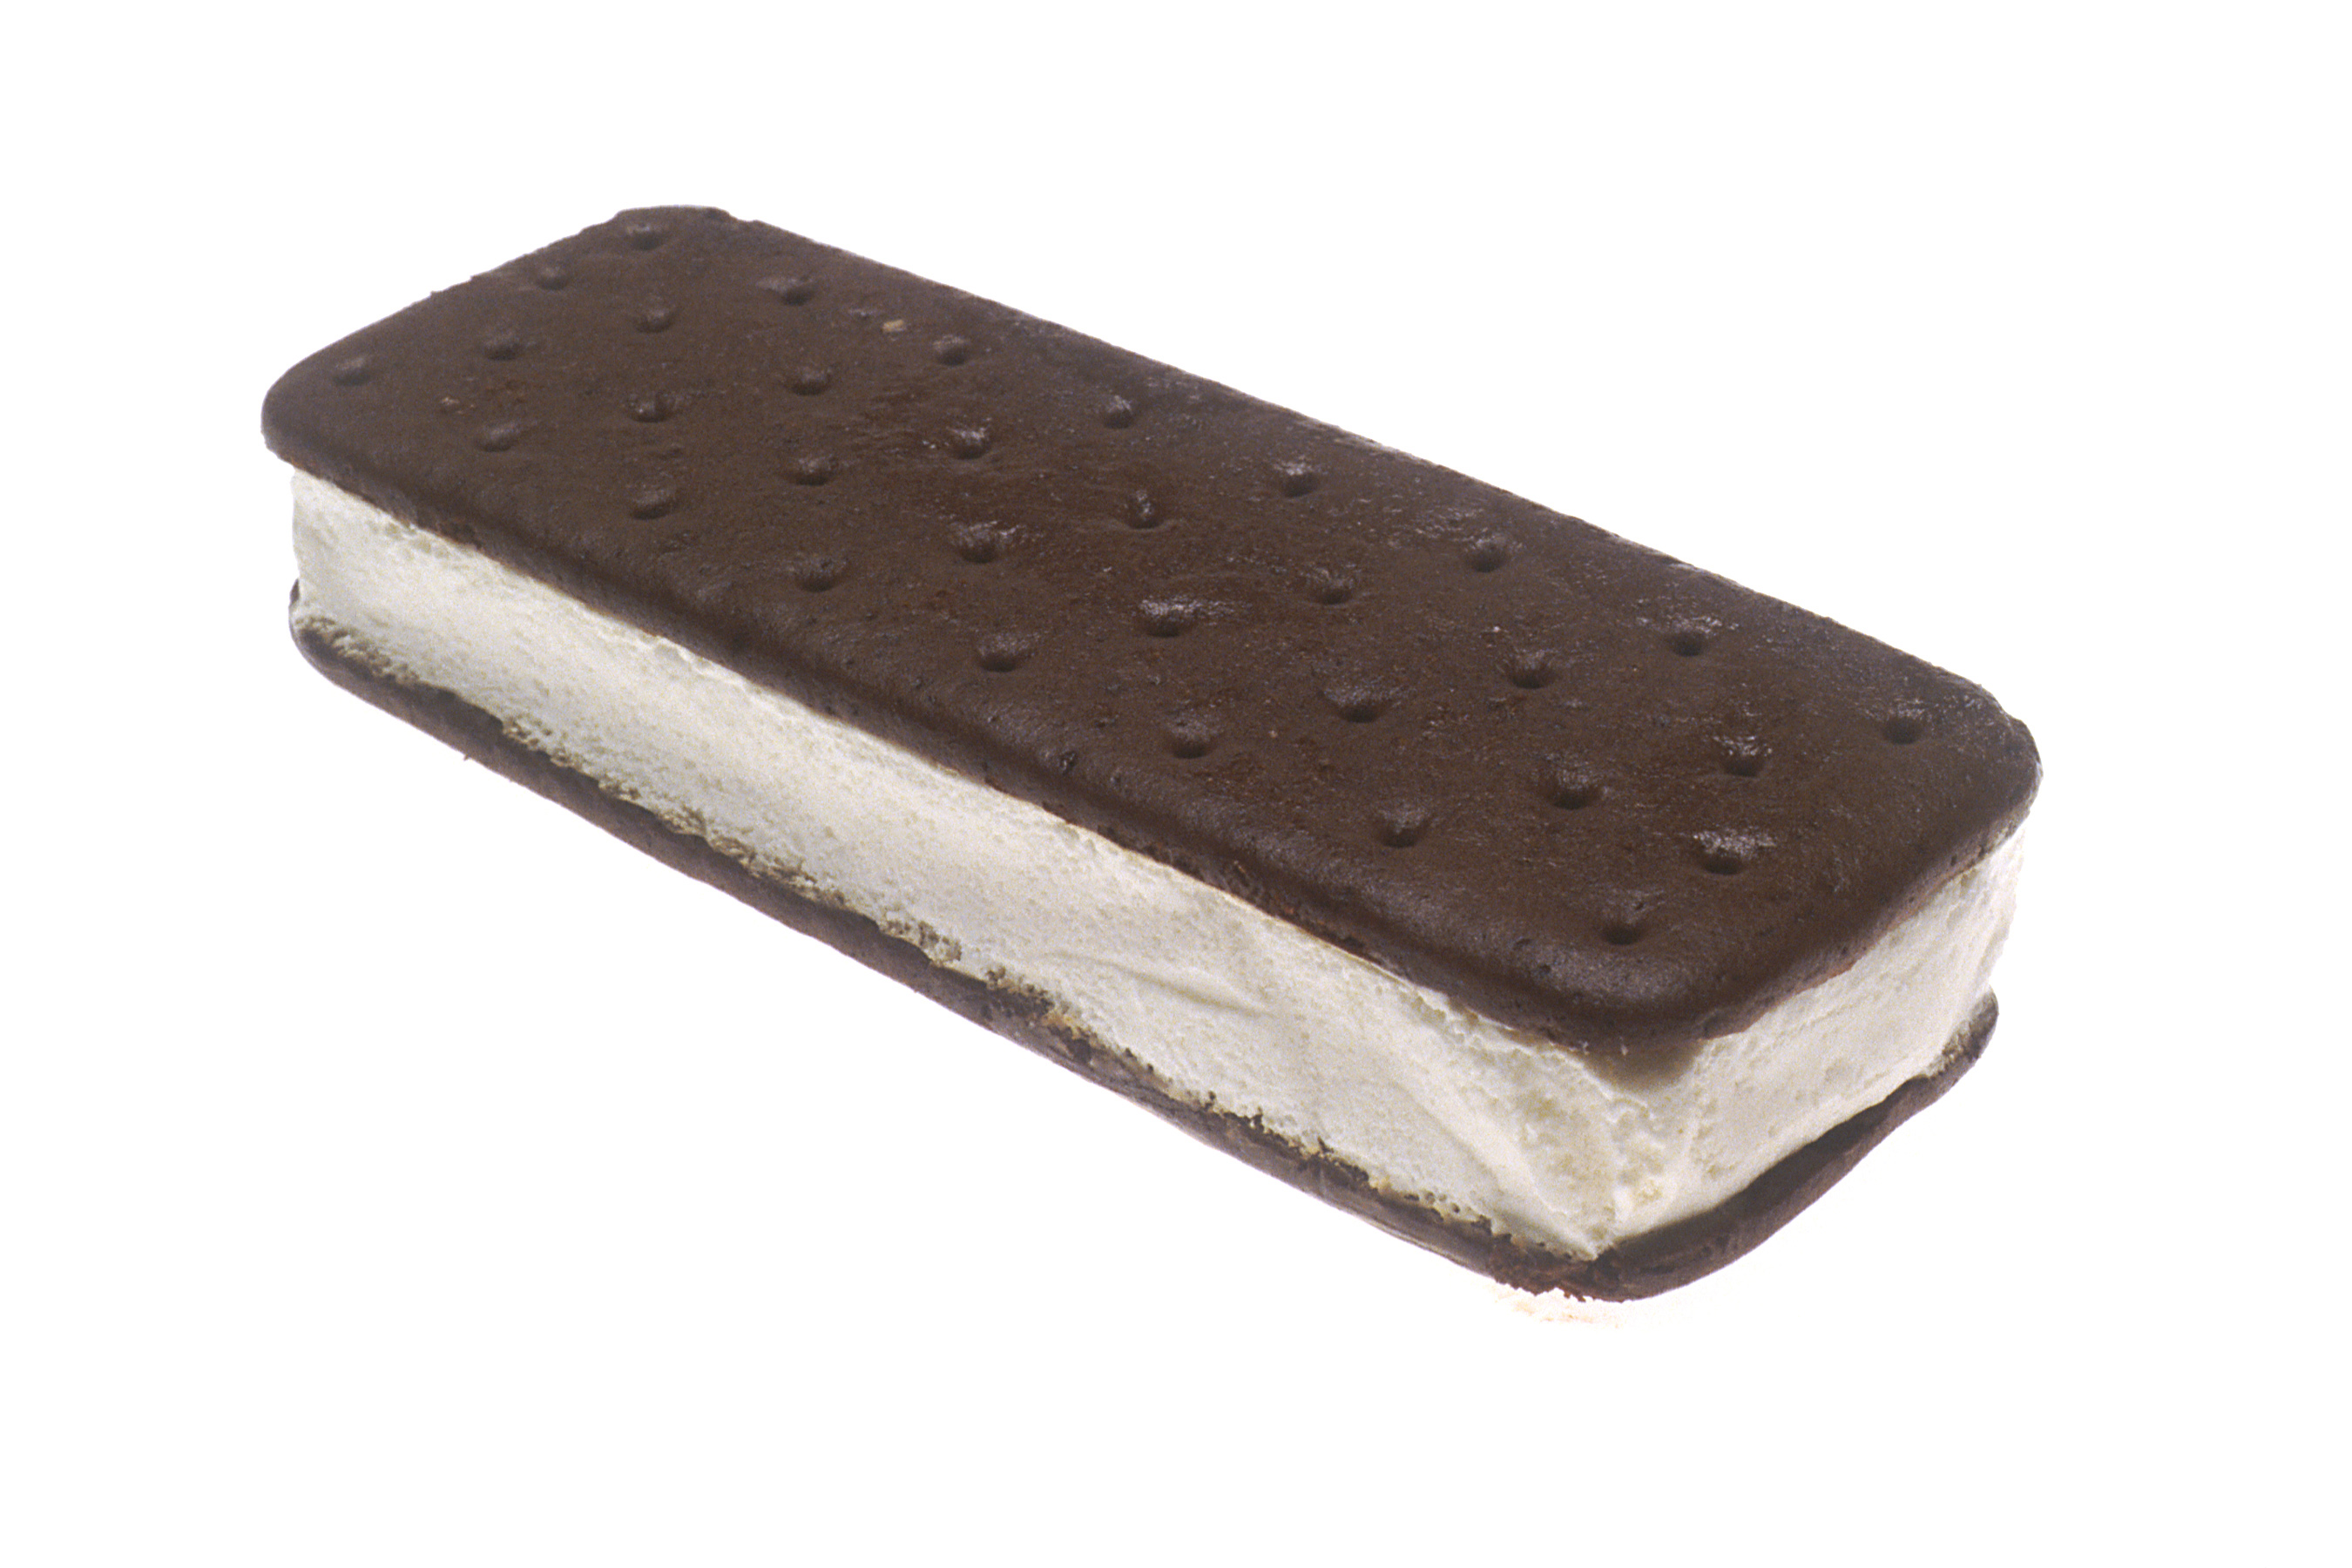 Ice cream sandwich - Wikipedia